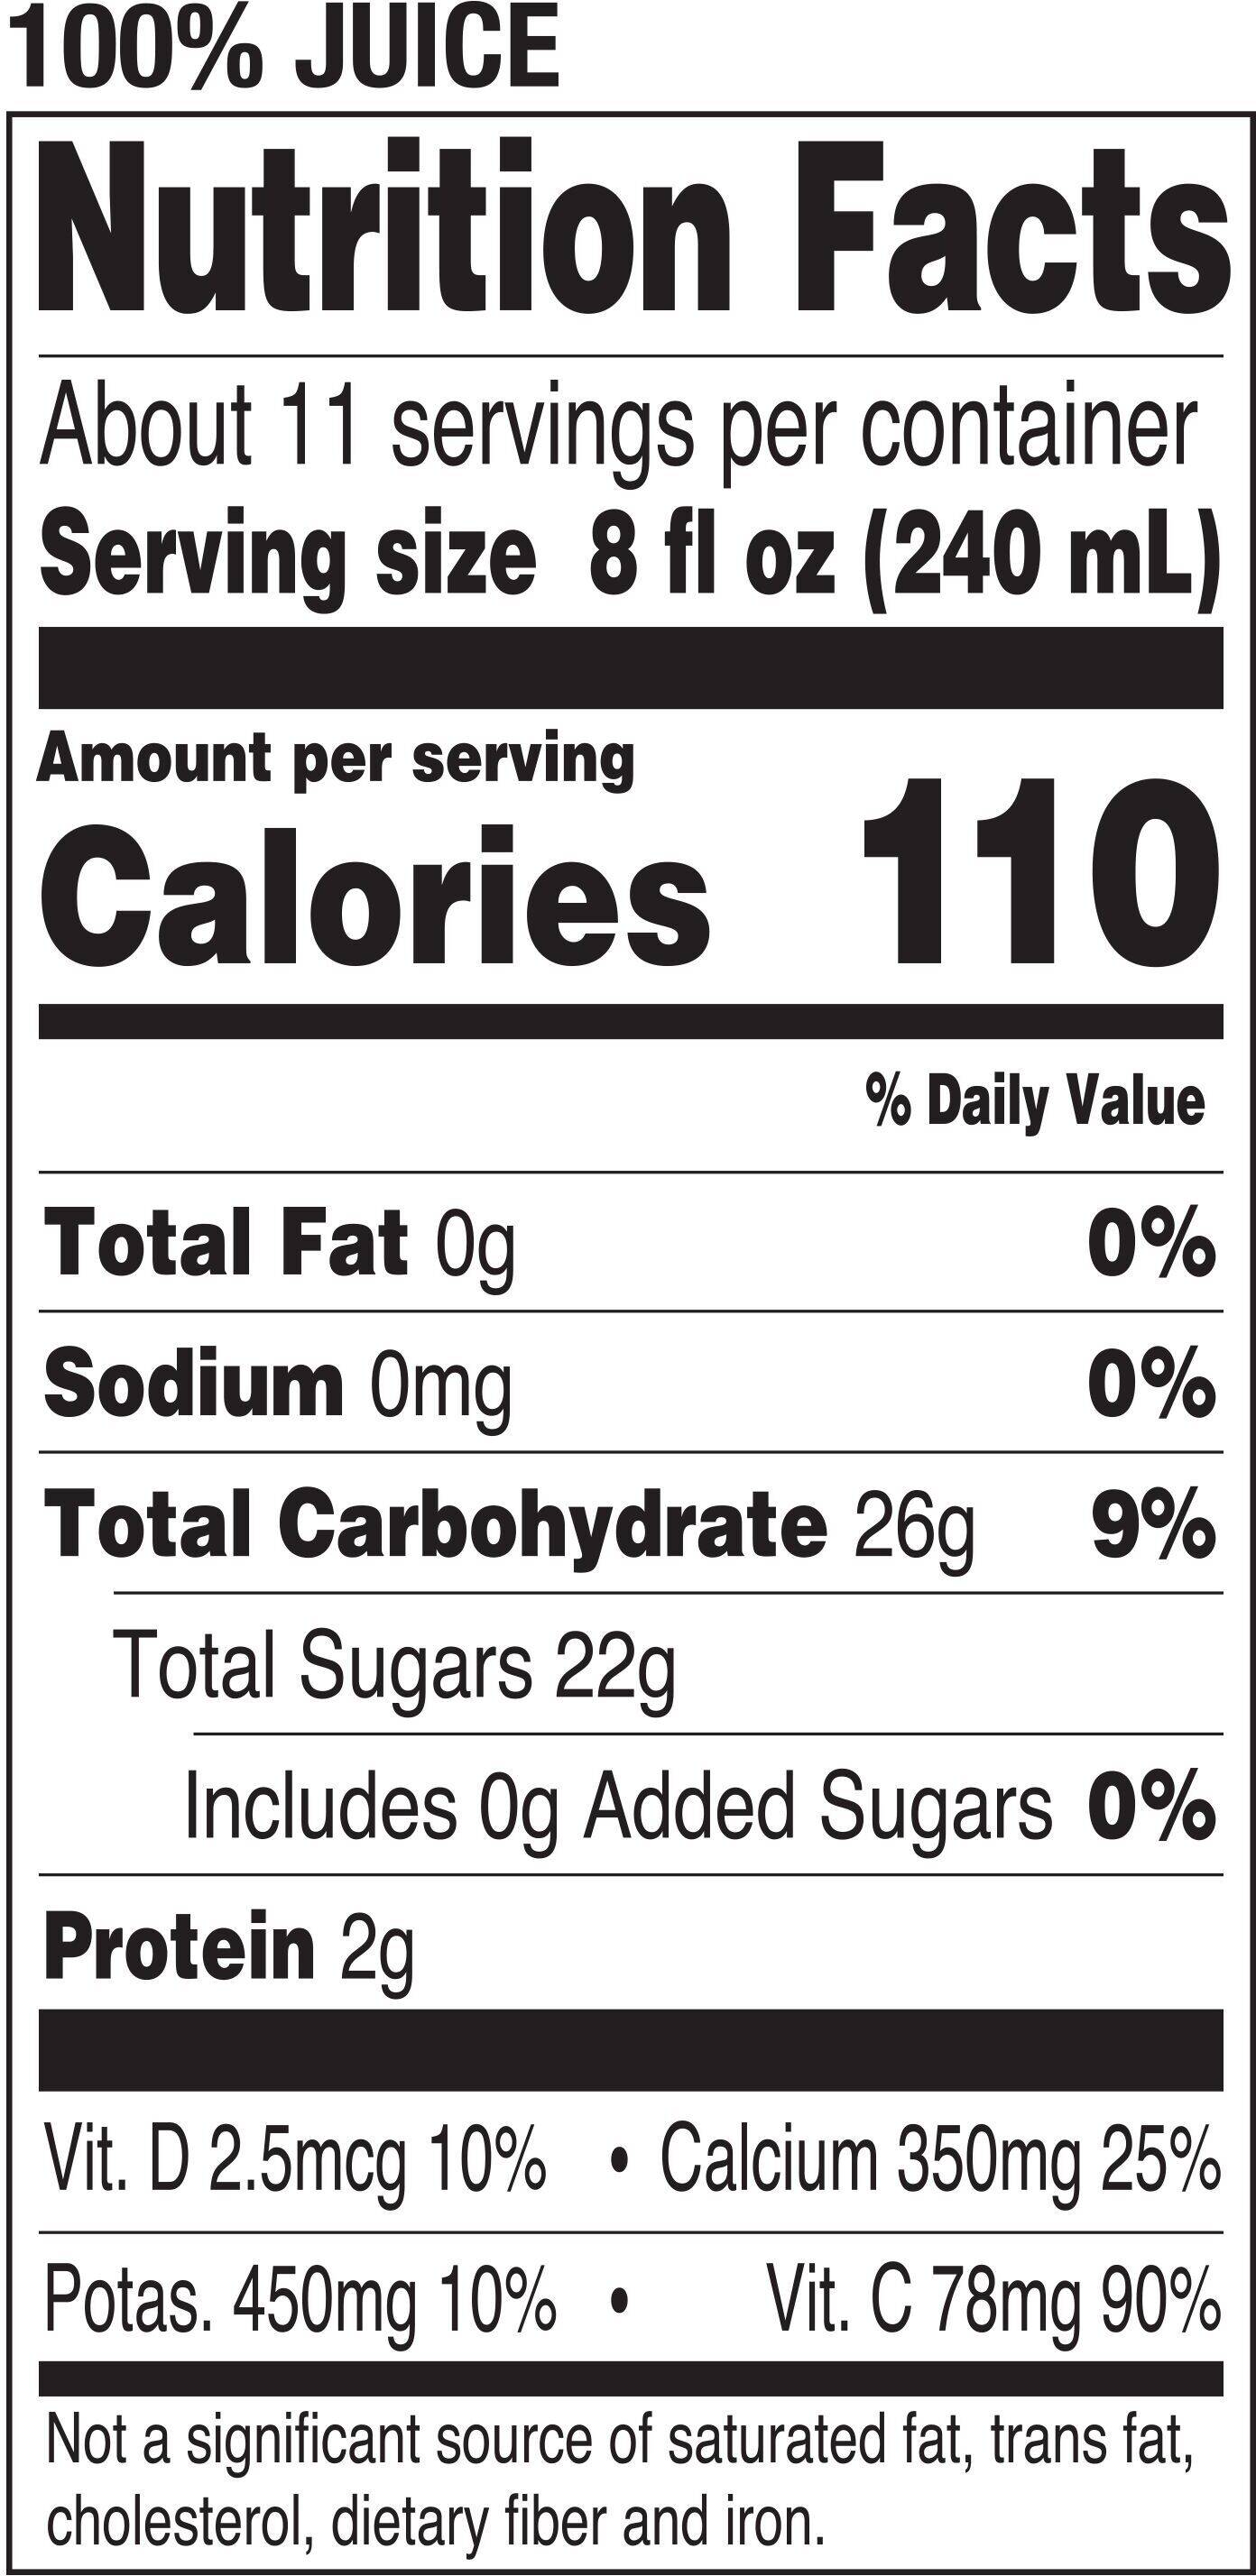 Image describing nutrition information for product Tropicana Pure Premium Calcium Orange Juice